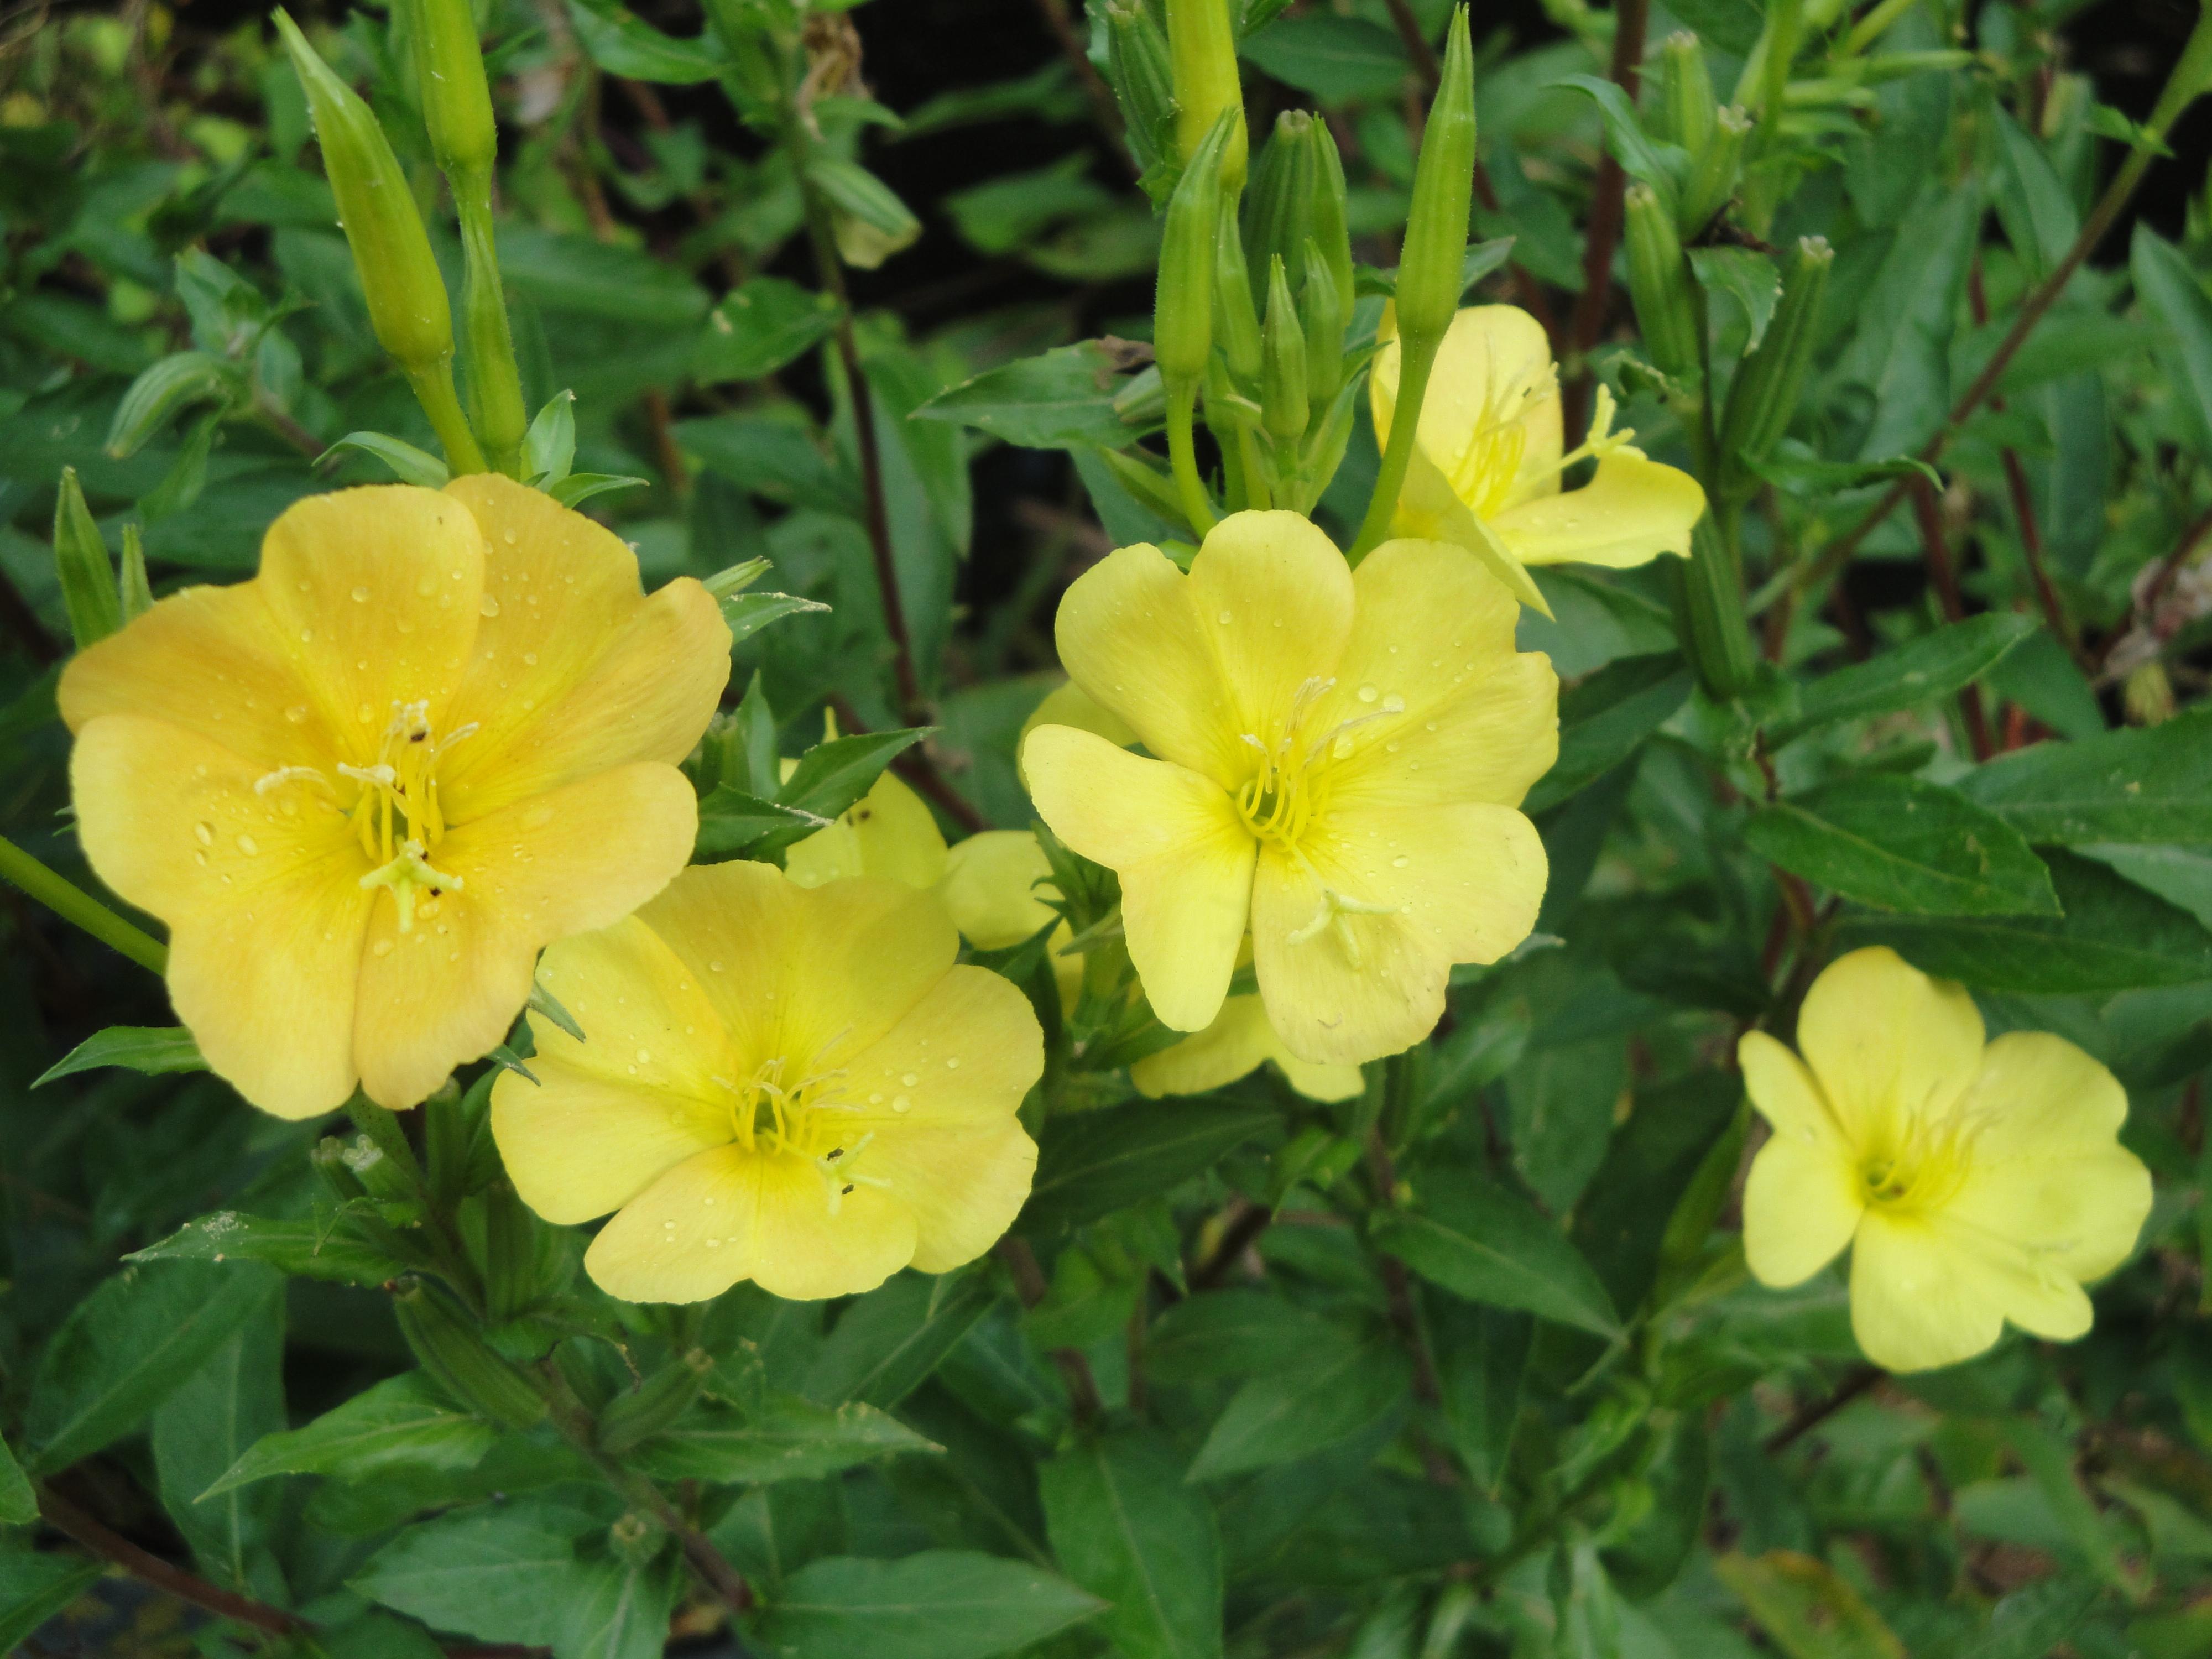 yellow flowers